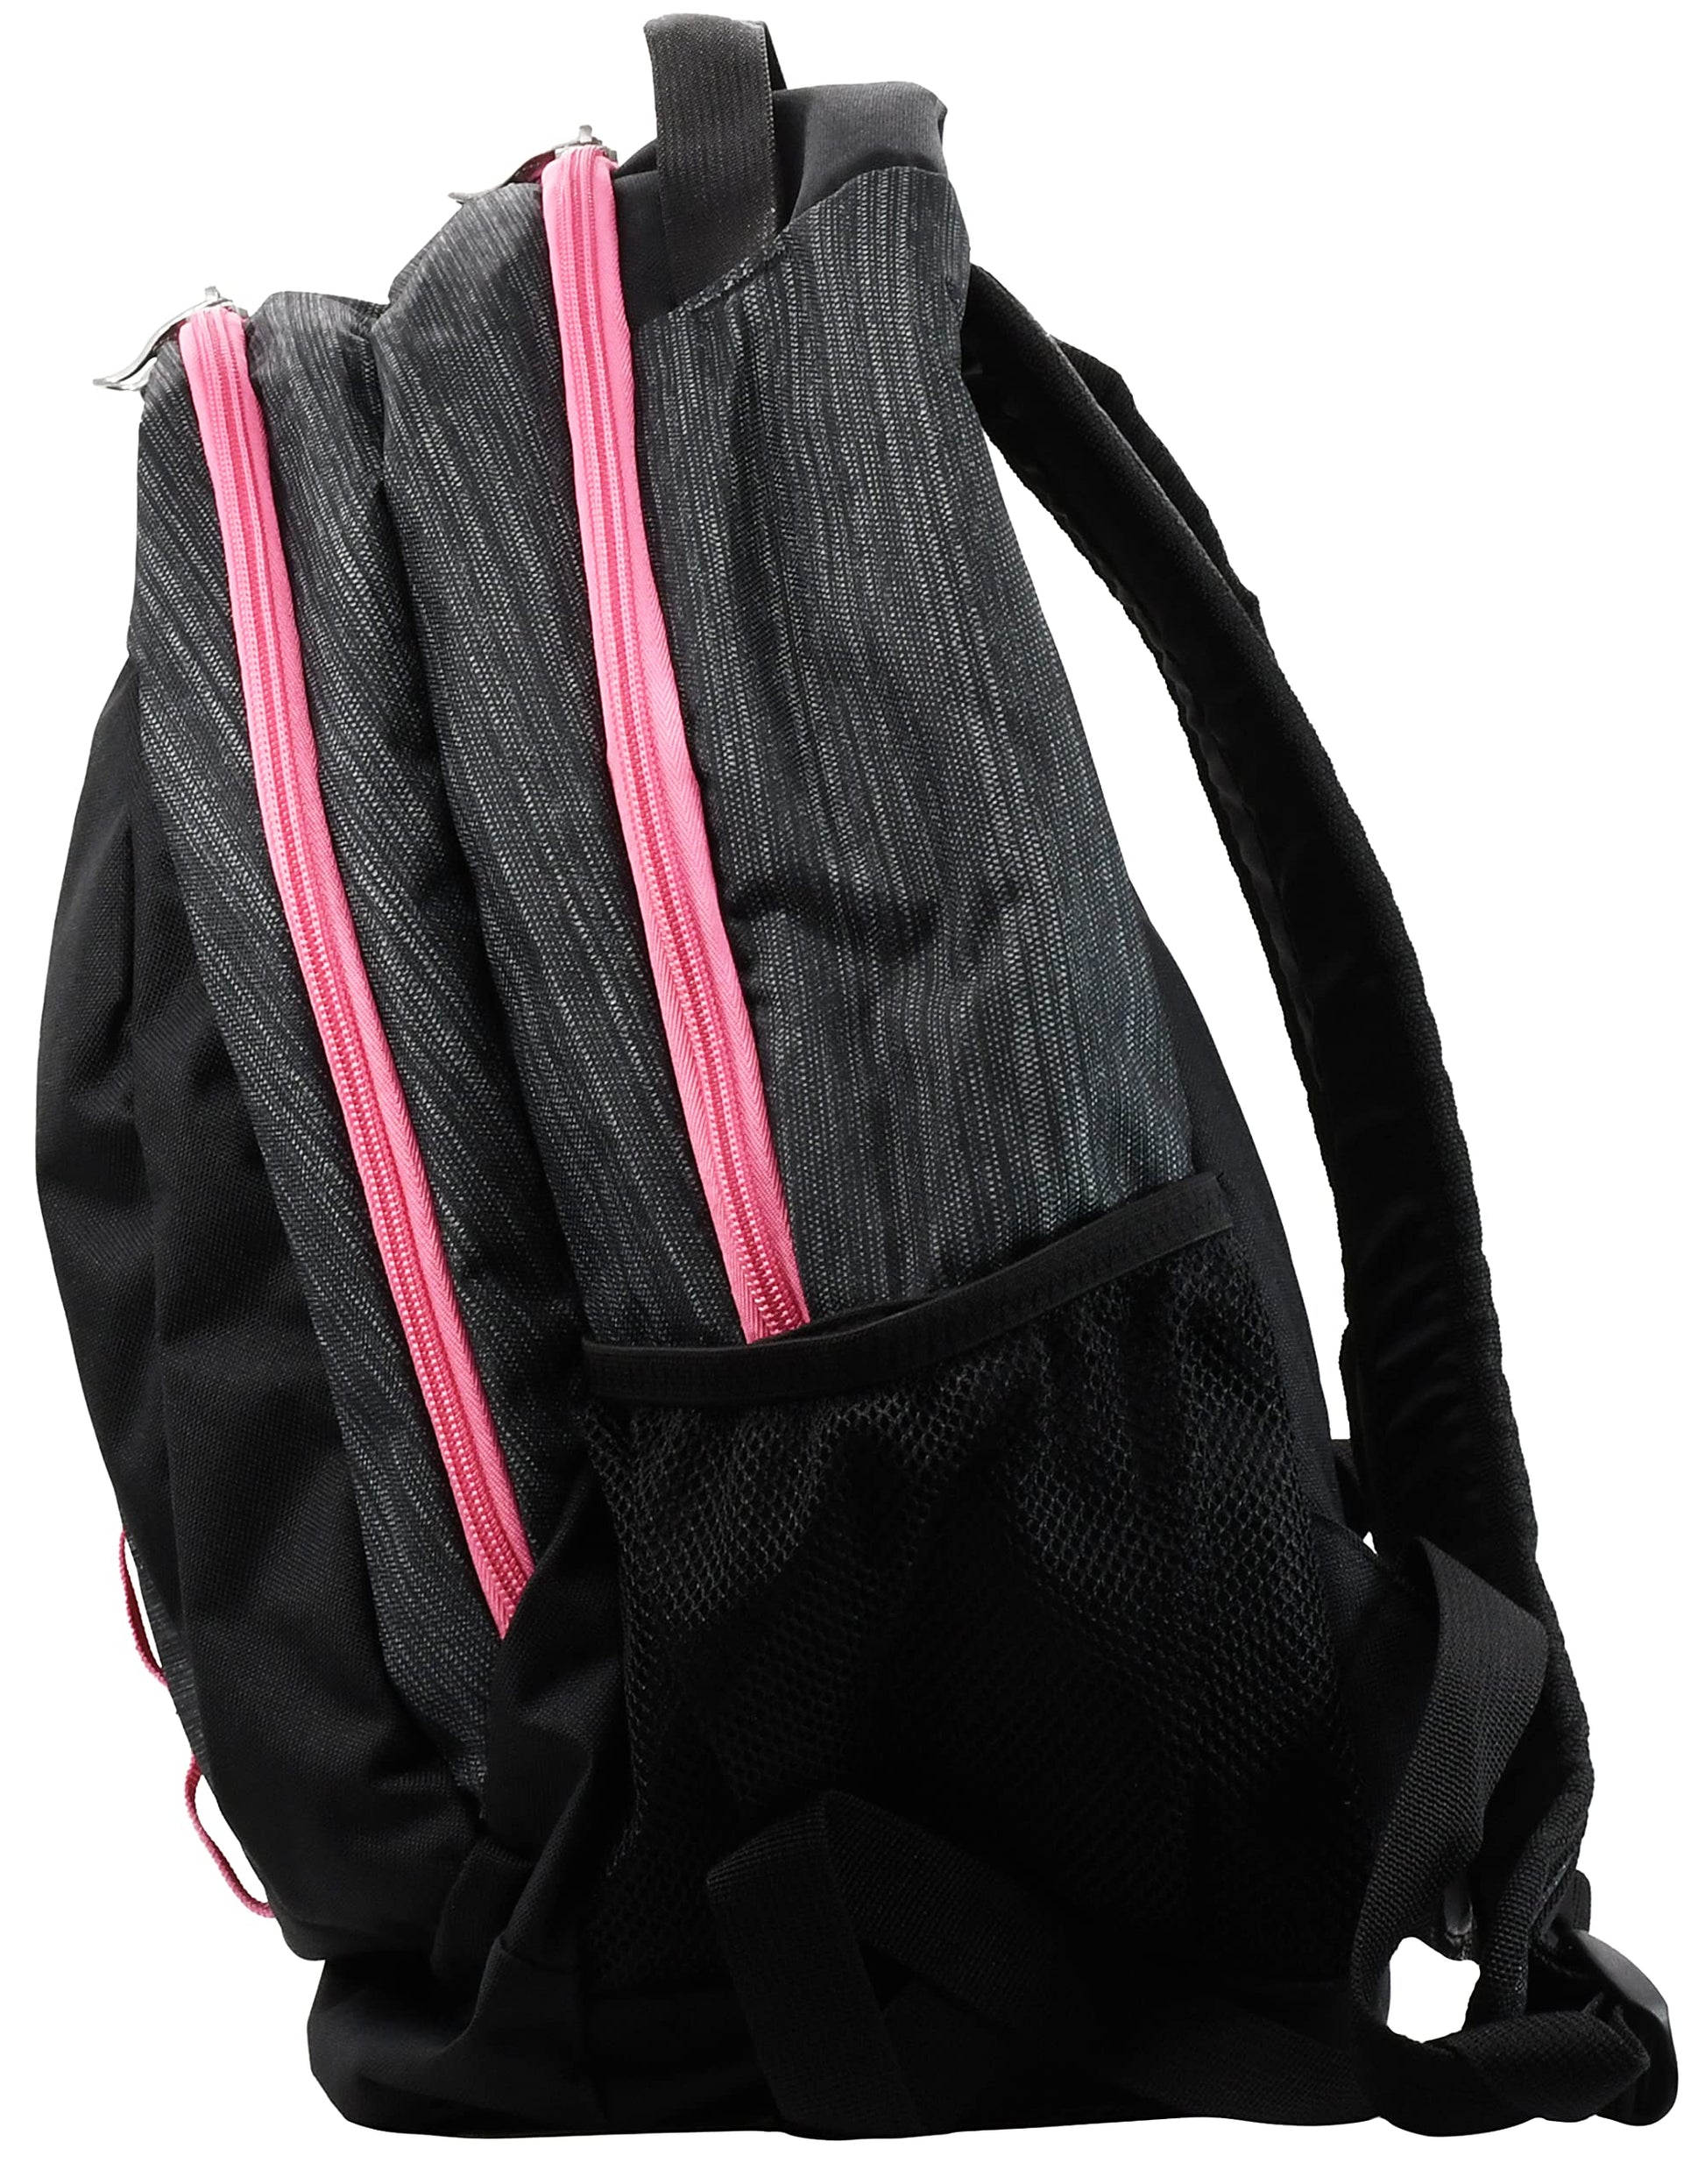 Adidas Unisex Journal Backpack